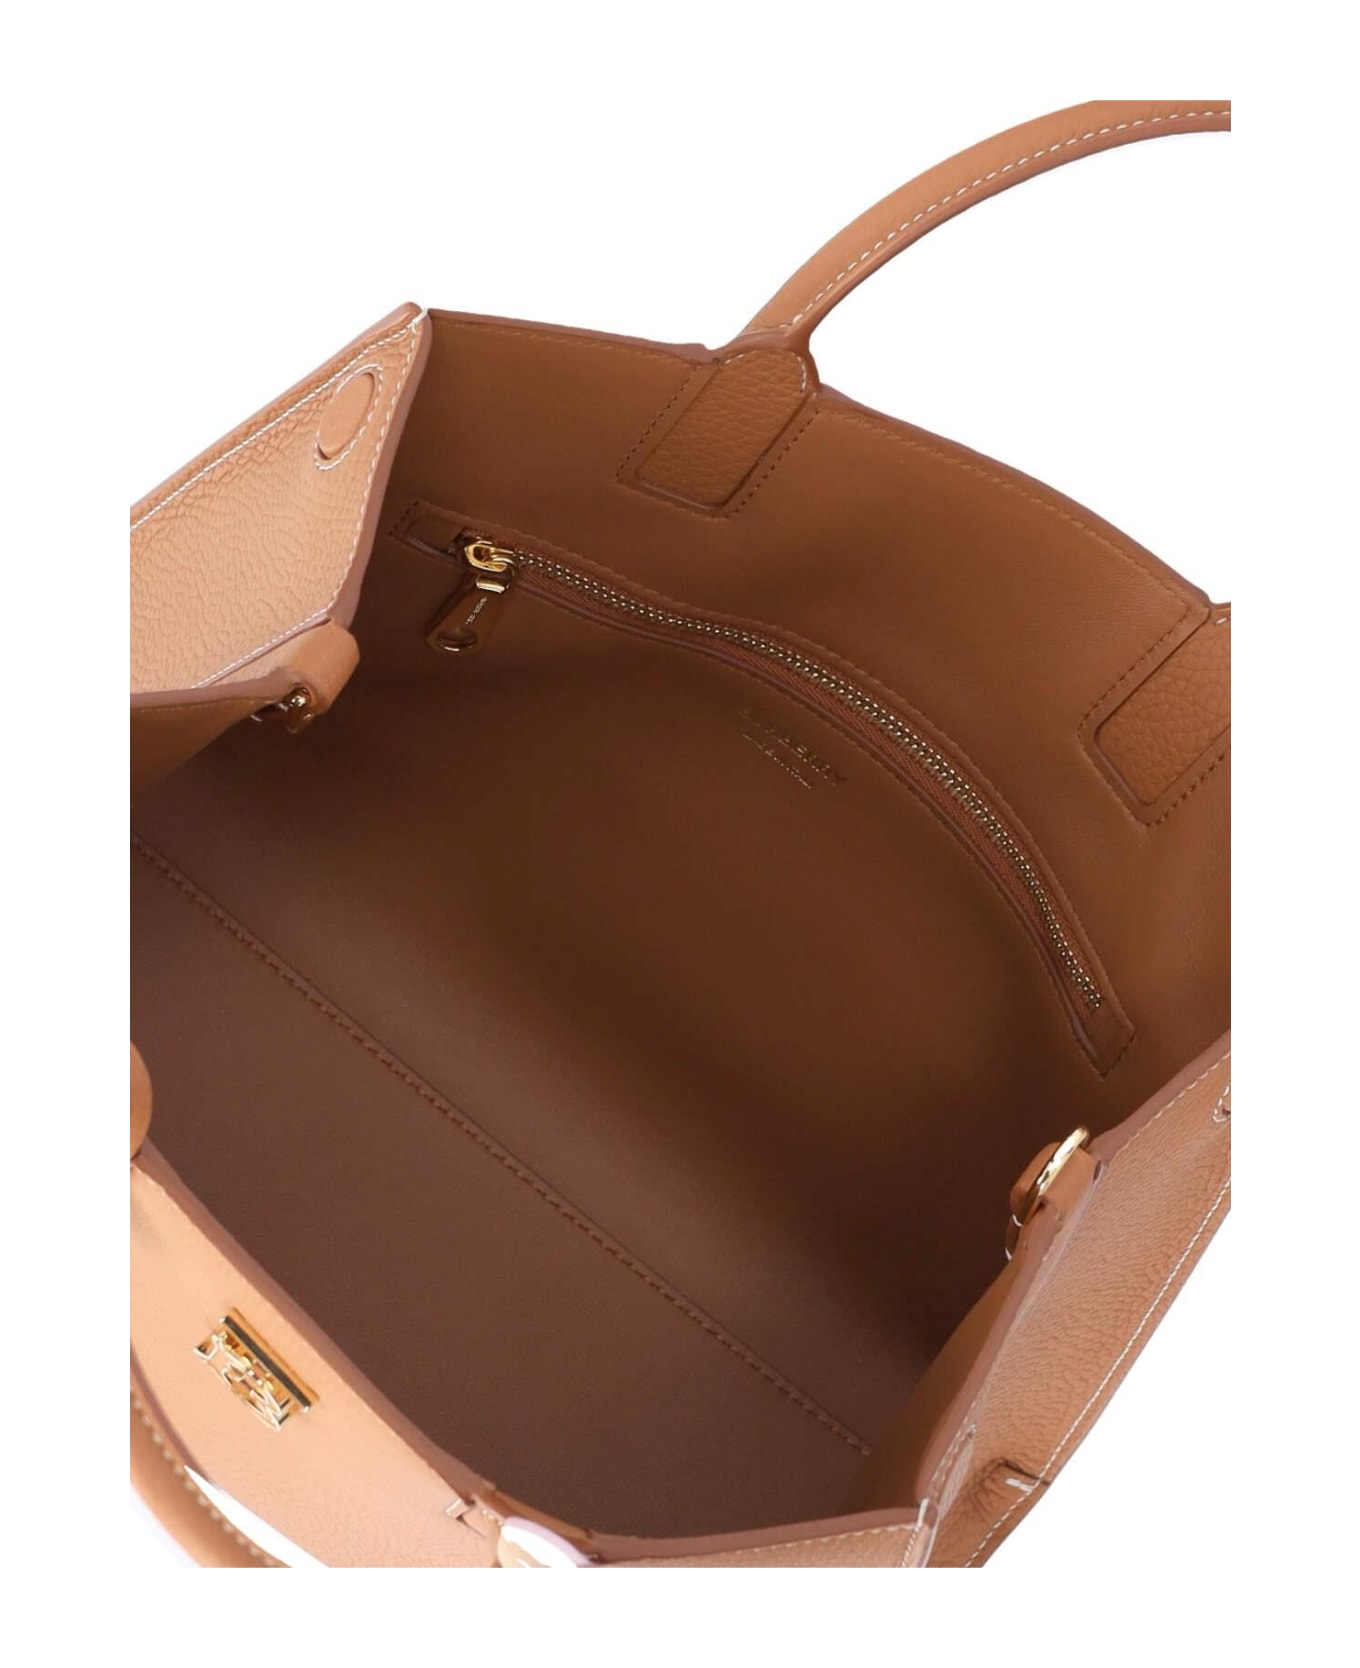 Burberry Mini Bag 'frances' - Warm russet brown トートバッグ